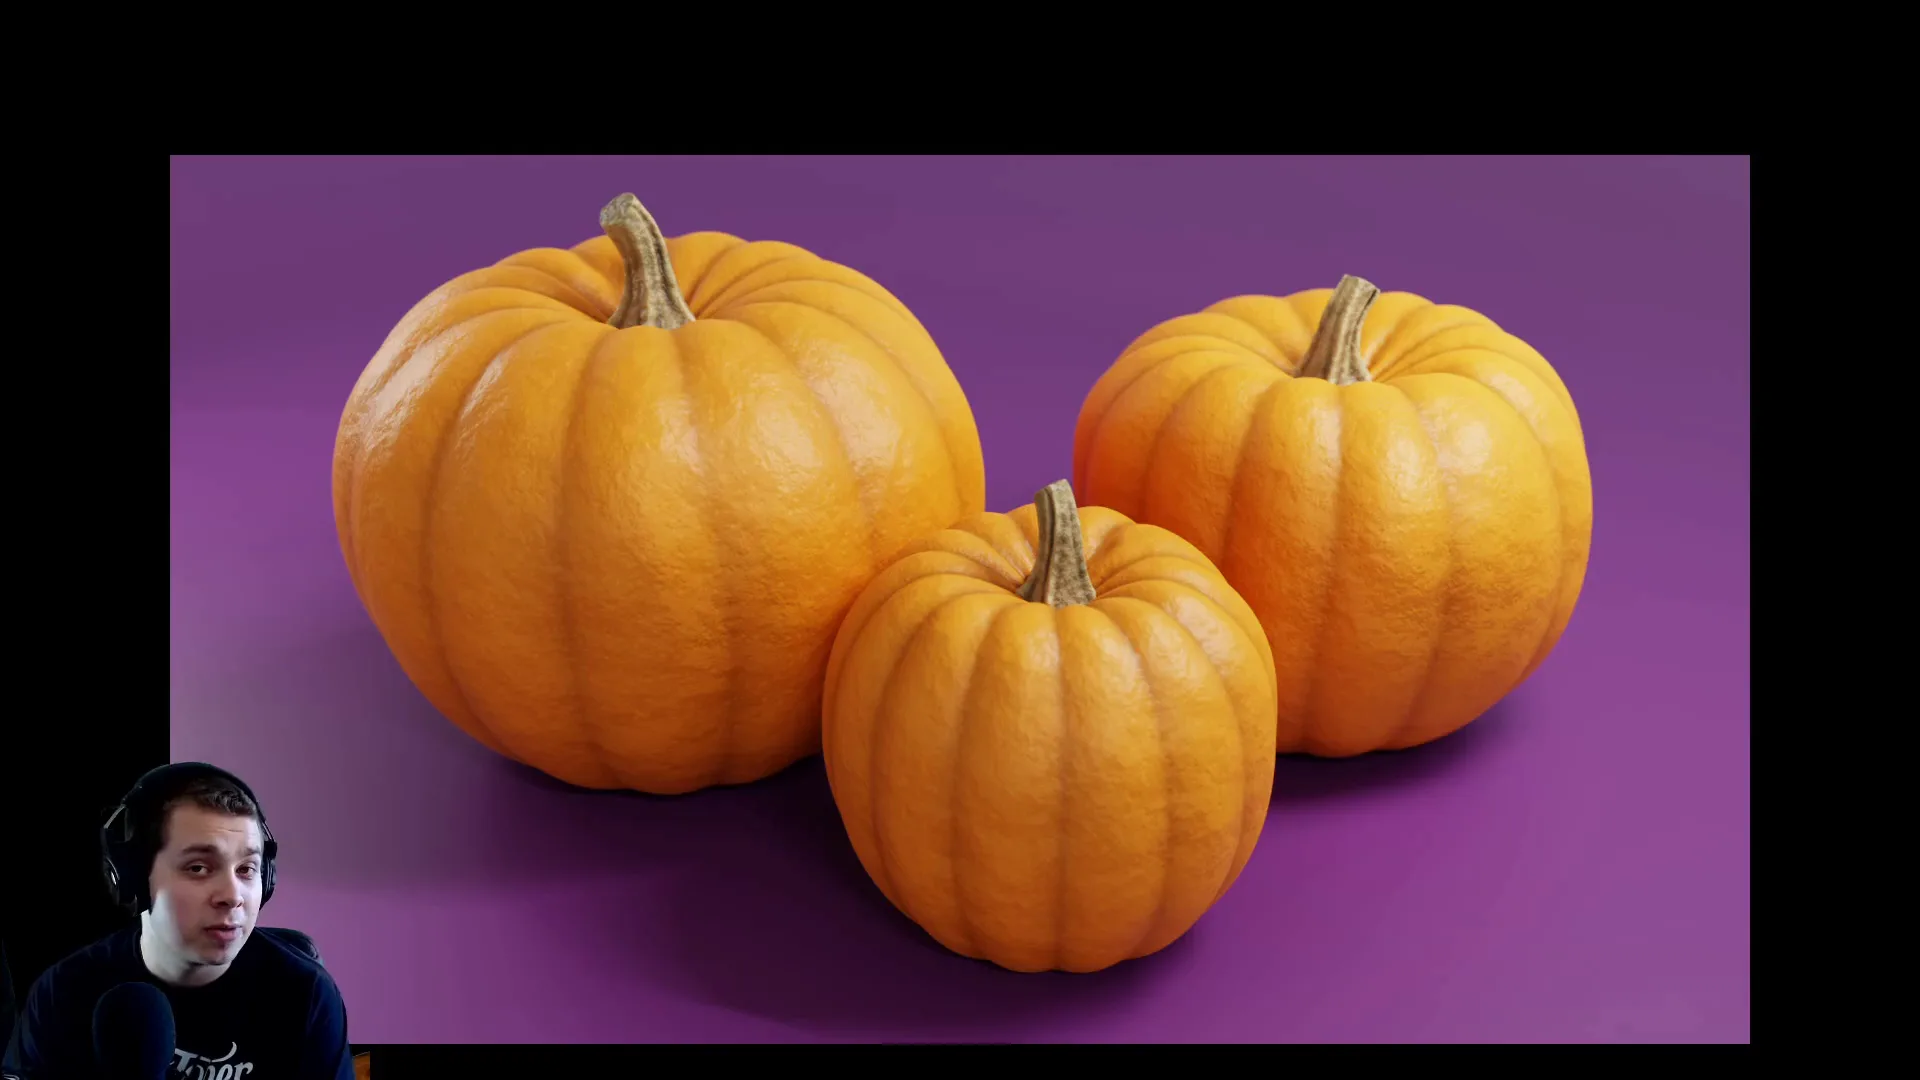 How to make Pumpkins in Blender (Tutorial)